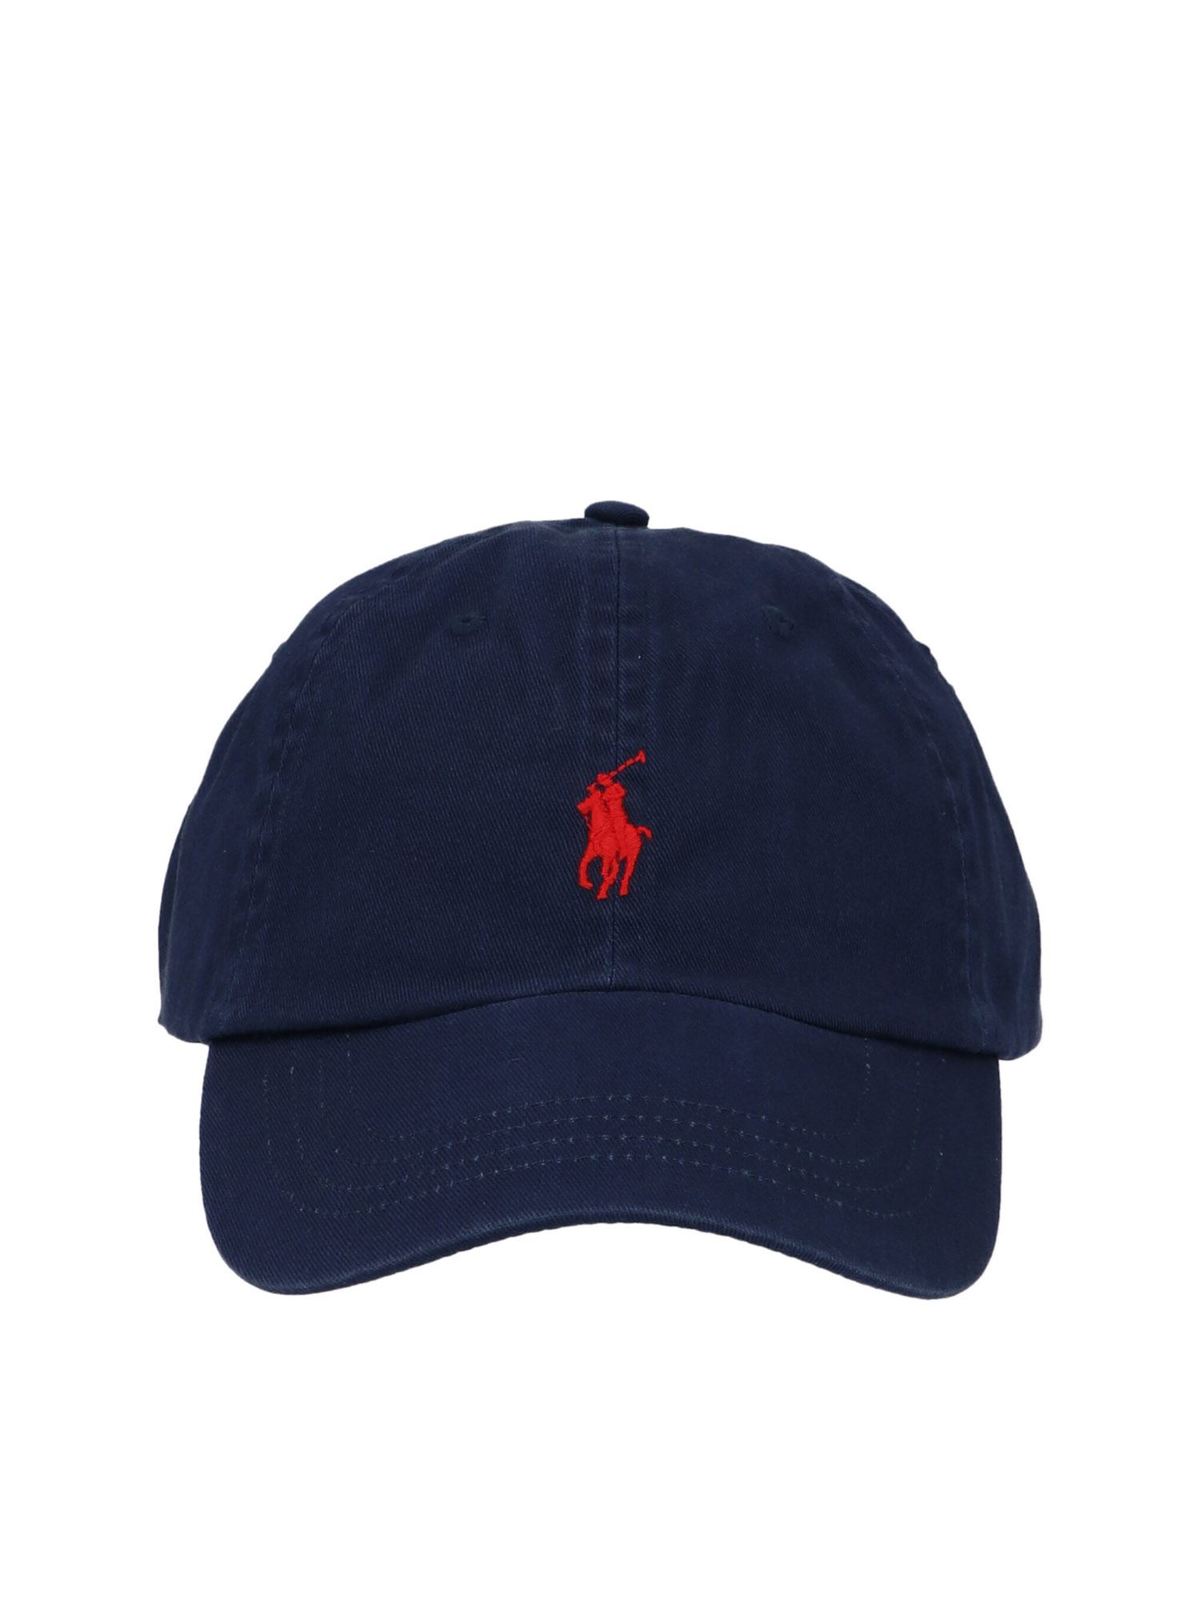 Polo Ralph Lauren - Logo baseball cap in blue - hats & caps - 710548524007